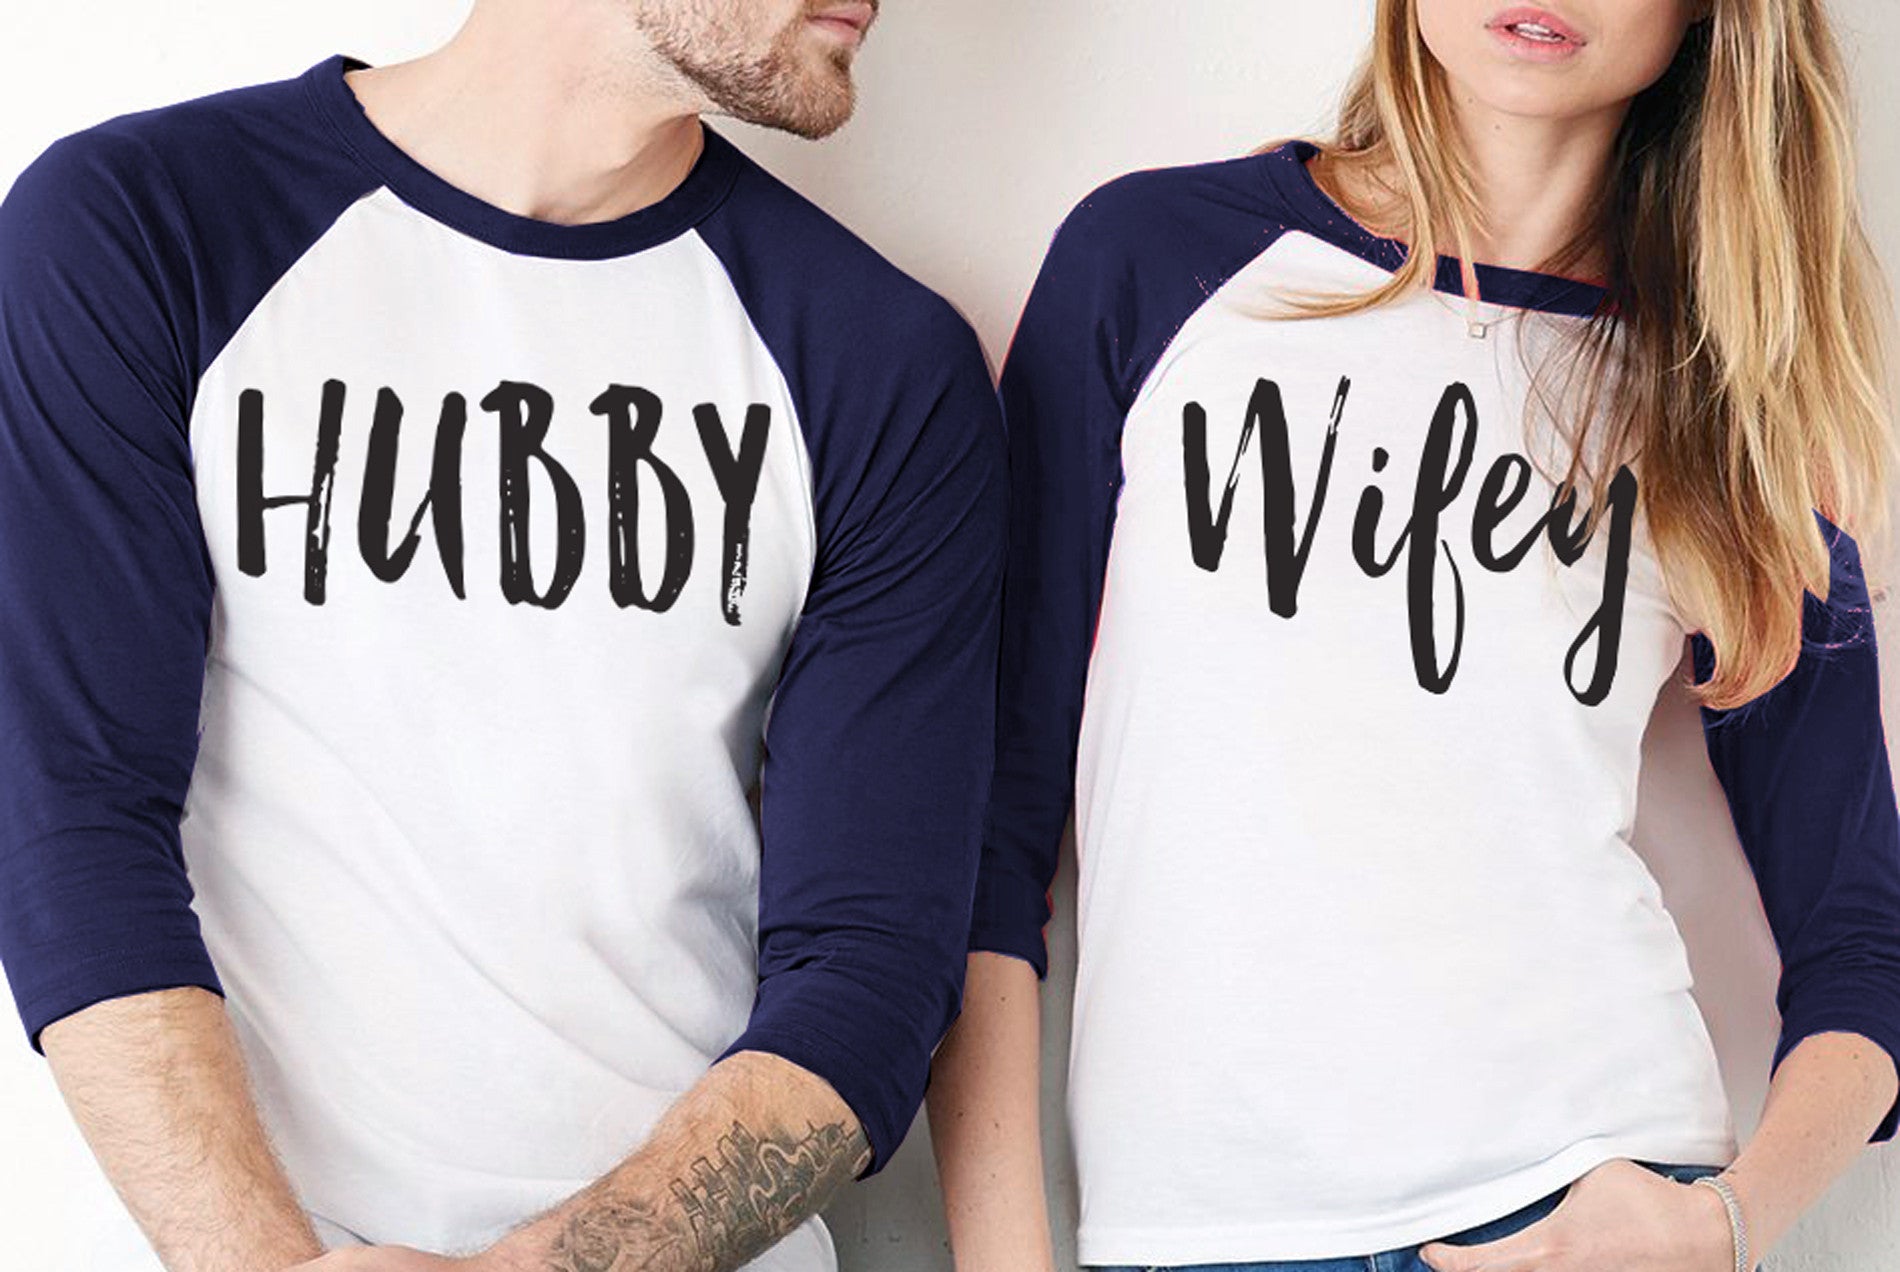 HUBBY & WIFEY SHIRTS Baseball Tees